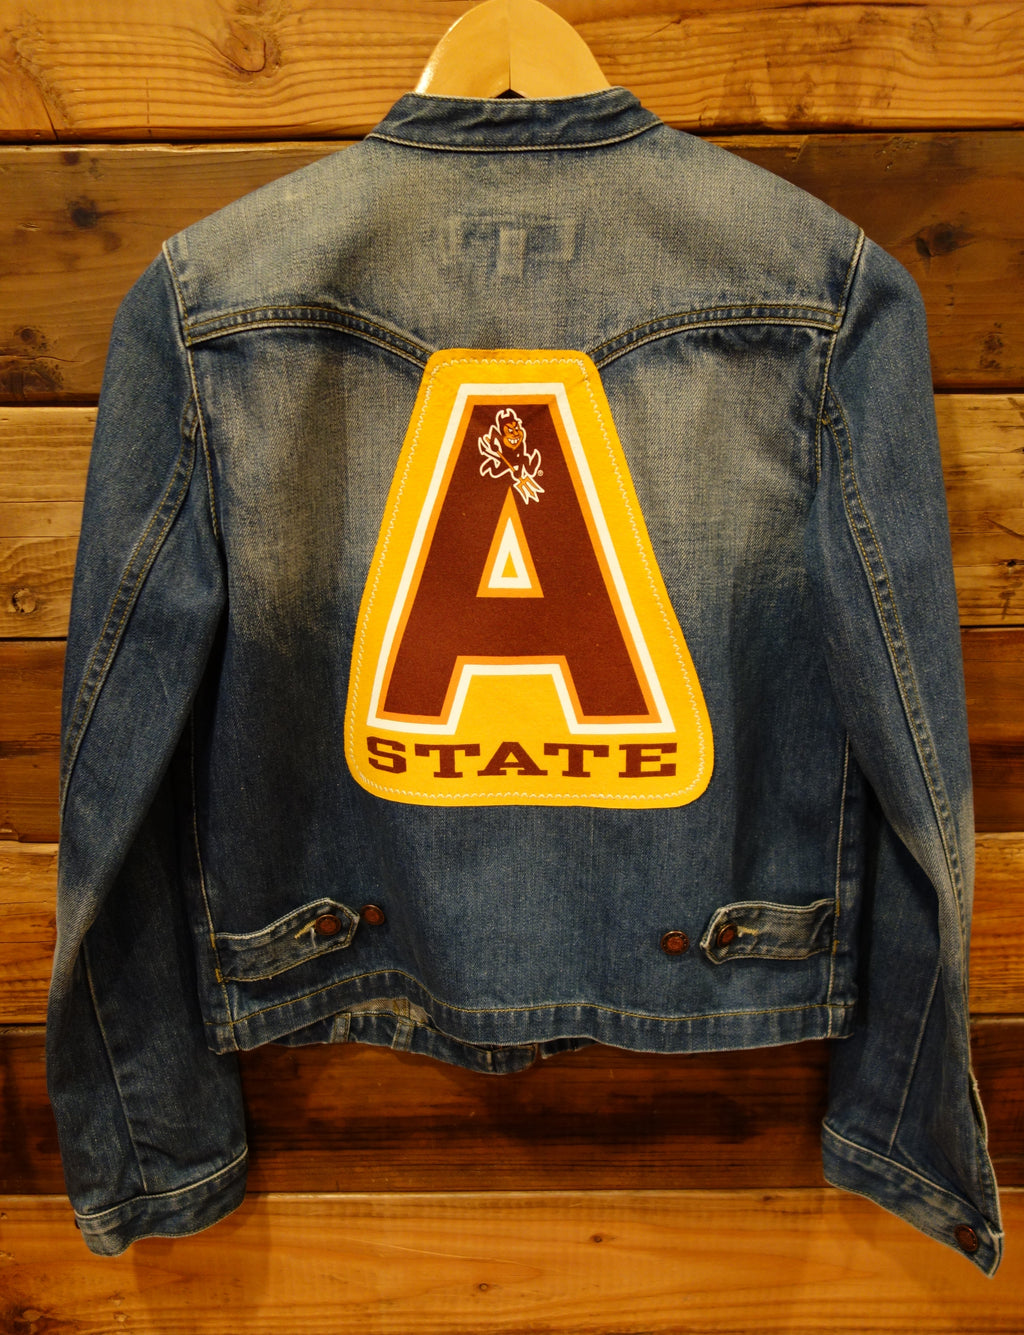 Vintage Earl Jean jacket, ASU tee